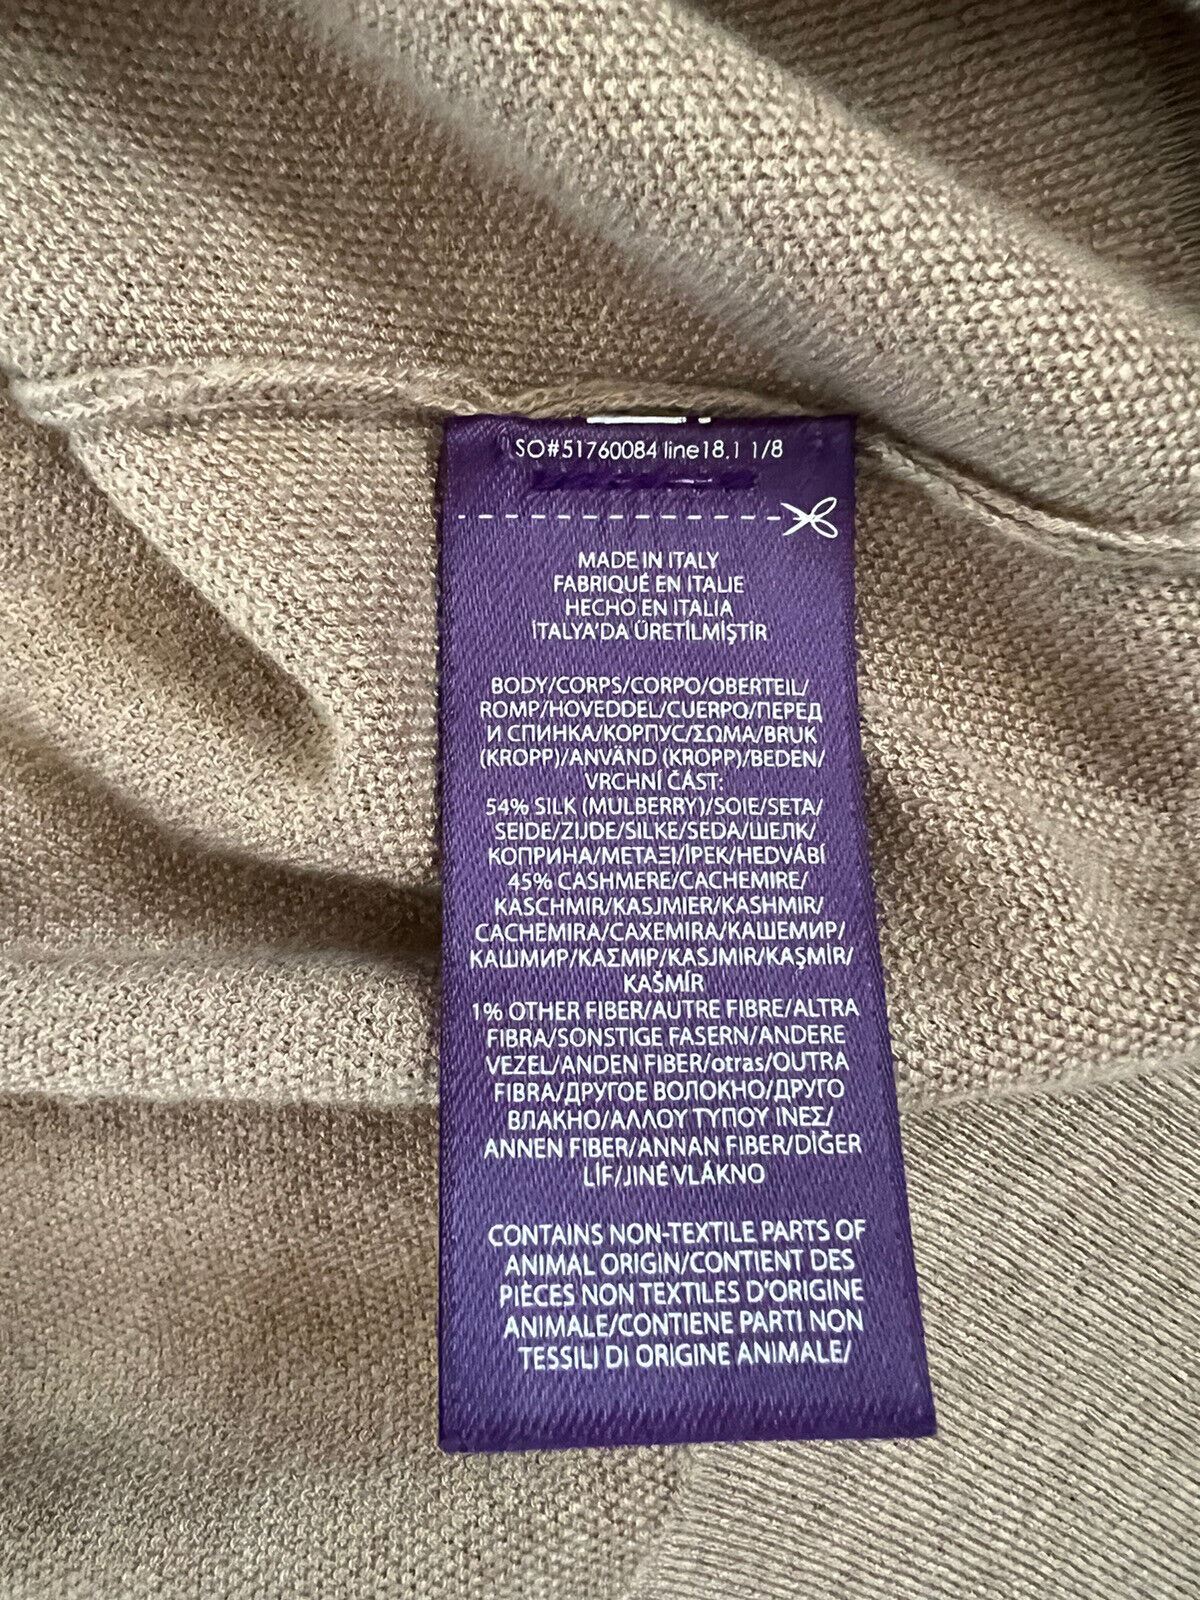 Рубашка поло из шелка и кашемира овсяного цвета от Ralph Lauren Purple Label, NWT $995, L, Италия